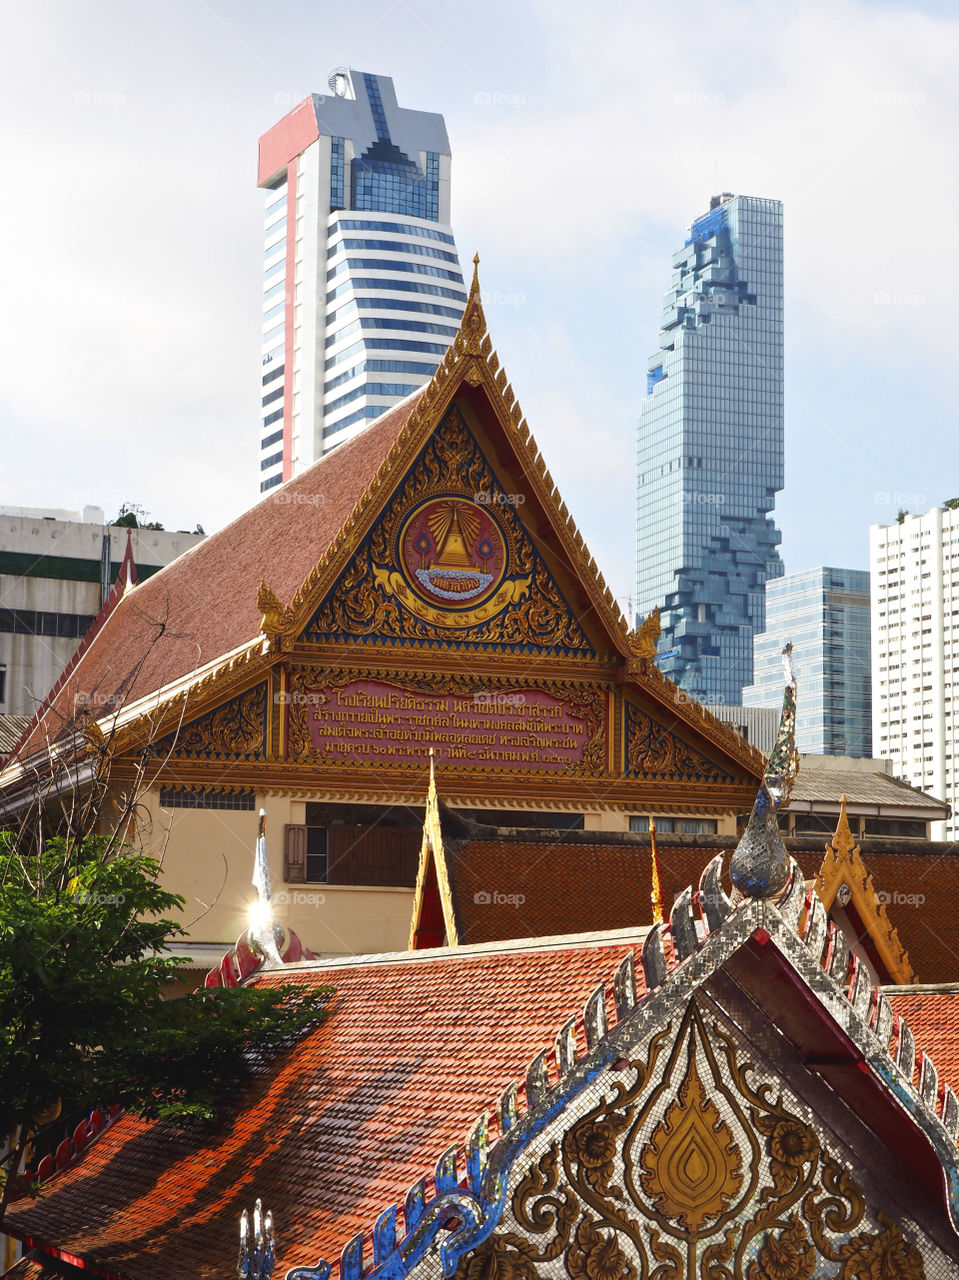 Thai architecture today